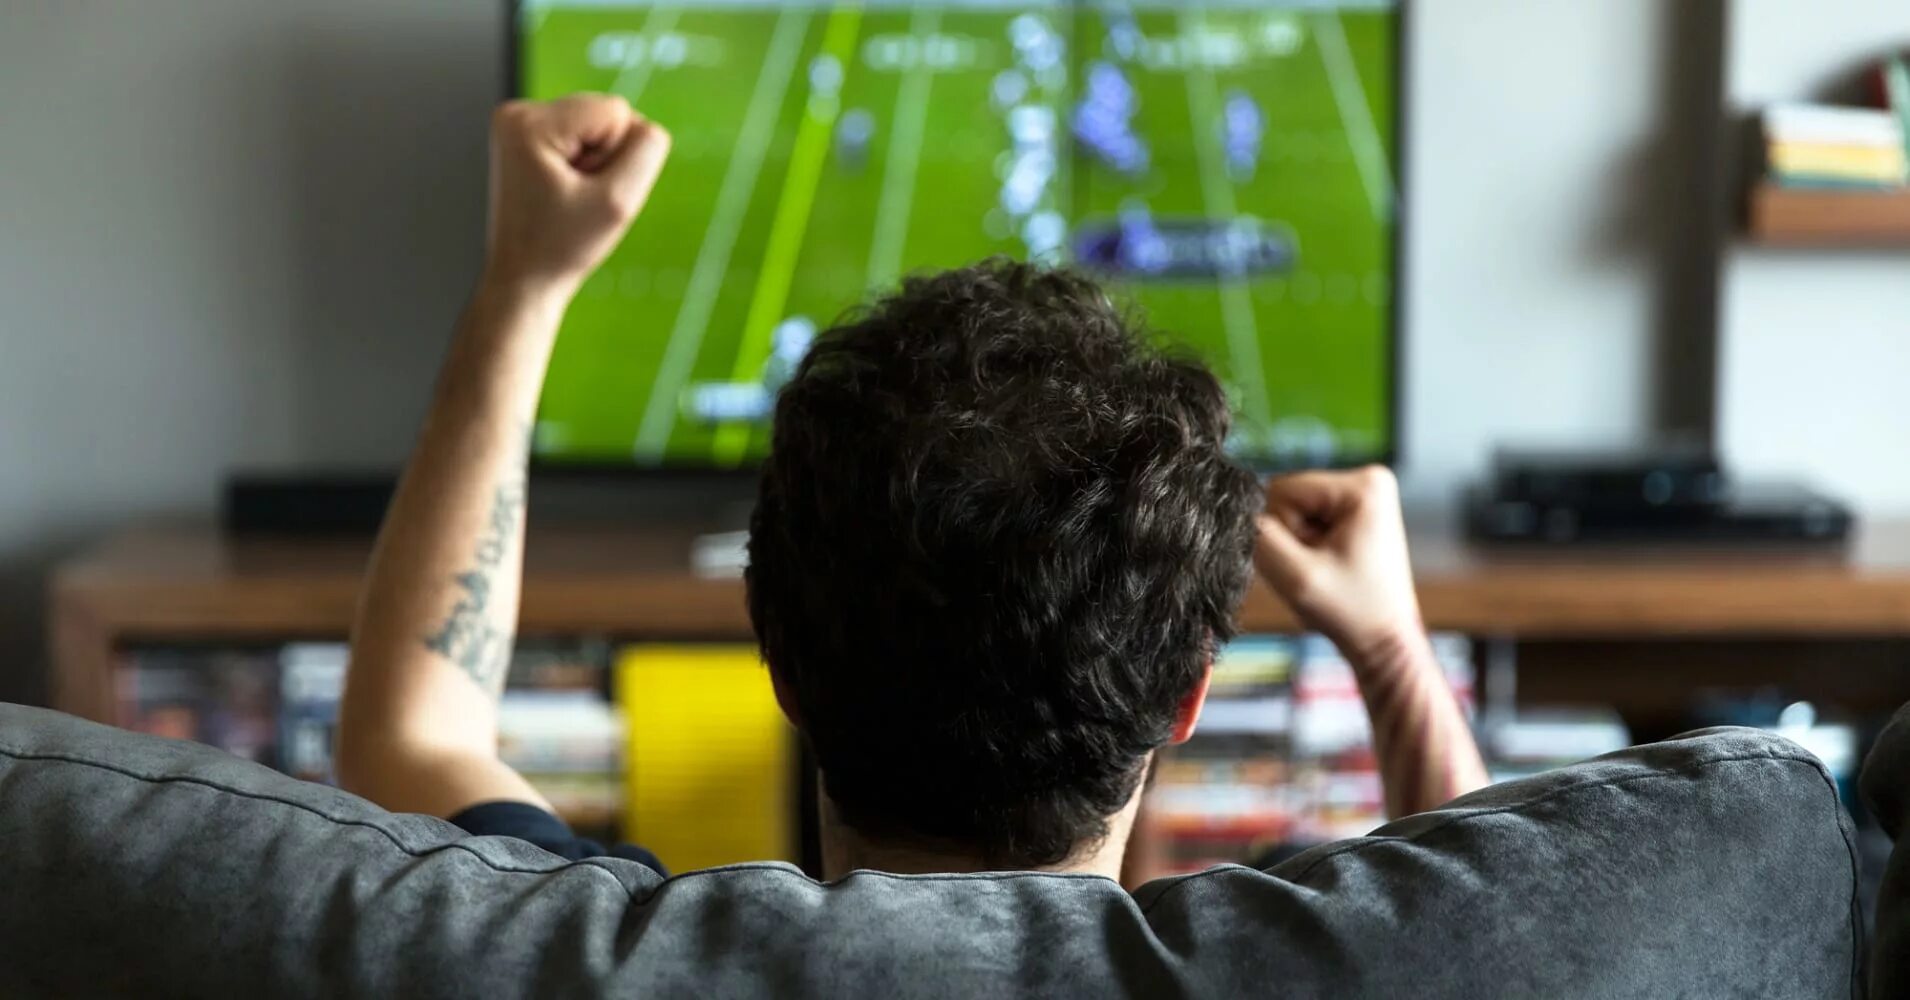 Футбол по телевизору. Человек телевизор. Человек перед телевизором. Телевизор футбол. Сколько смотрят футбол